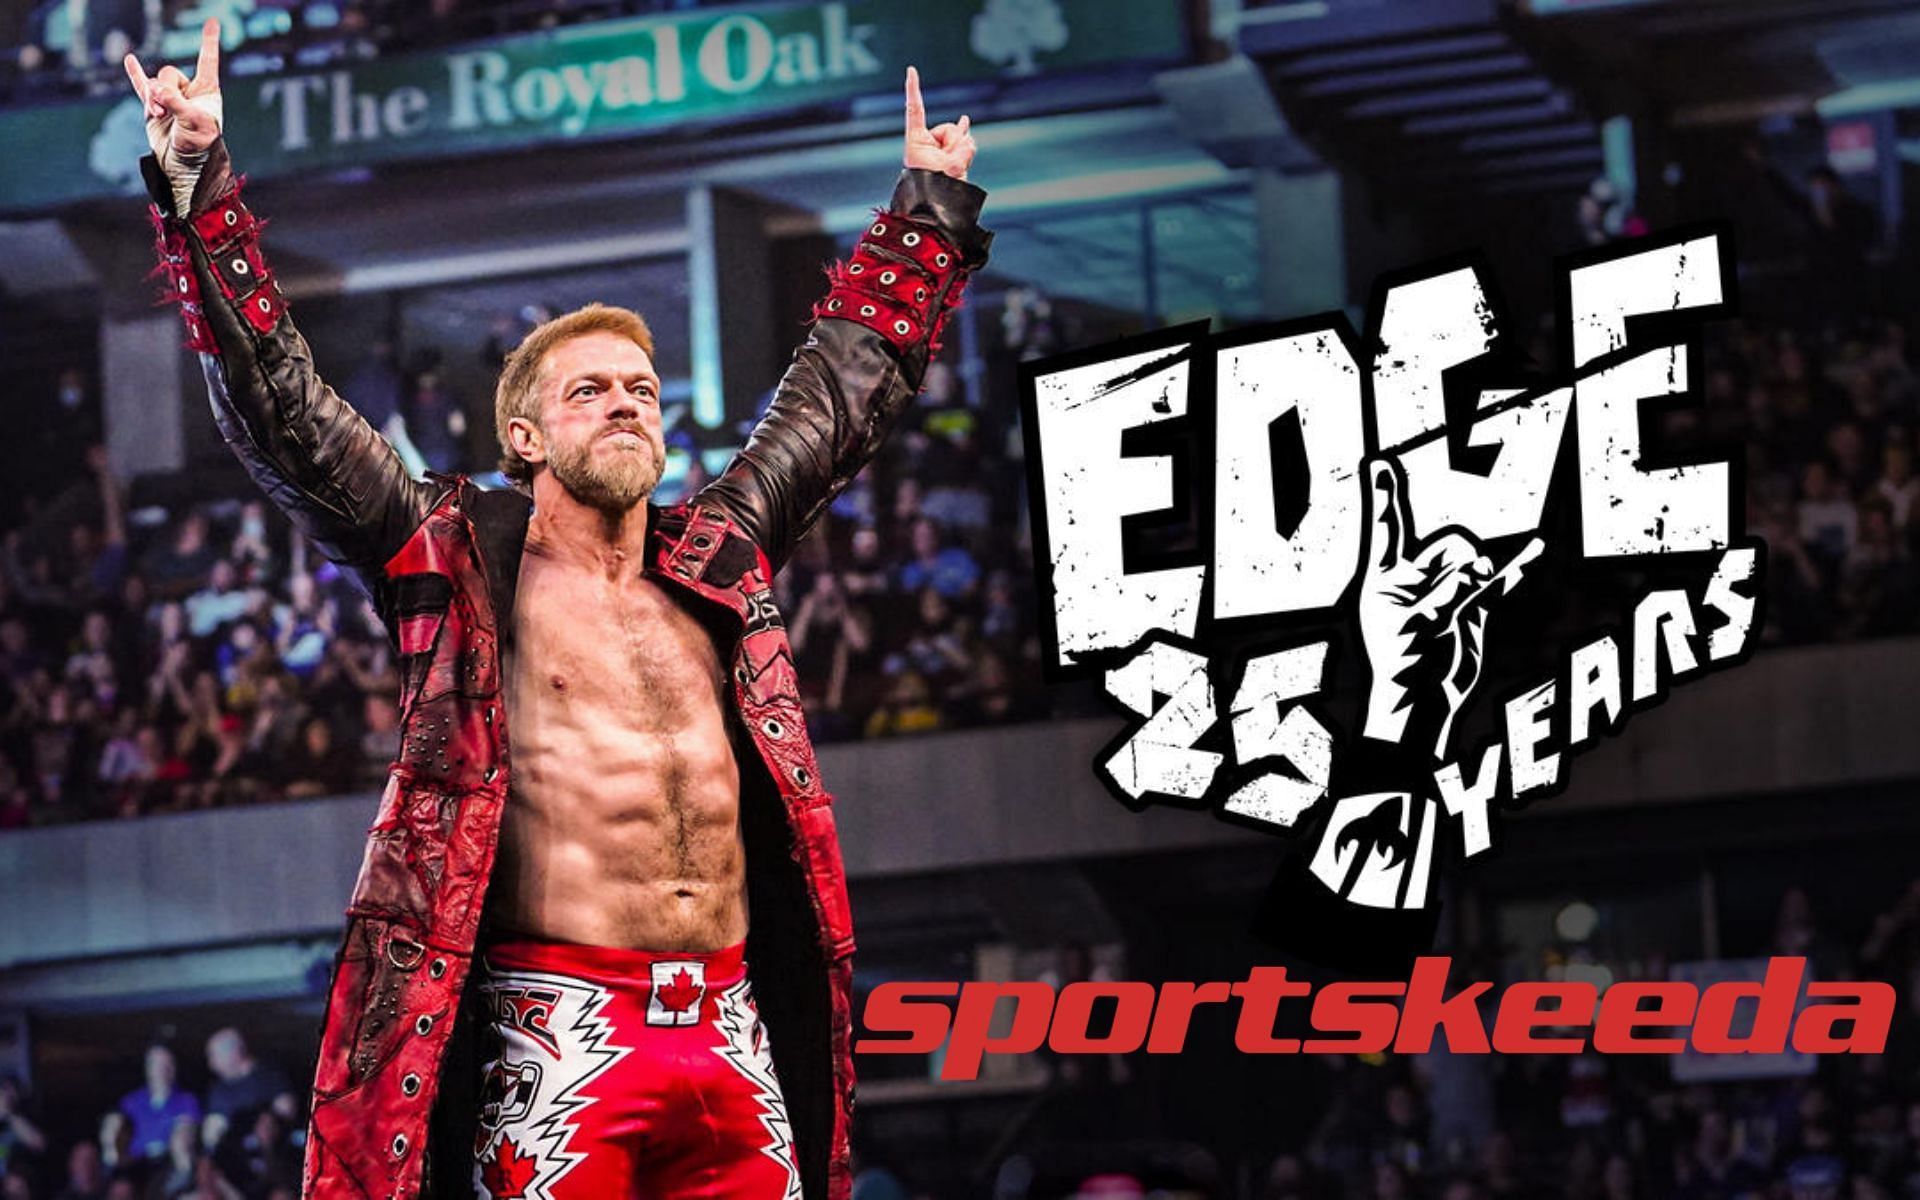 Edge celebrates 25 years of greatness!